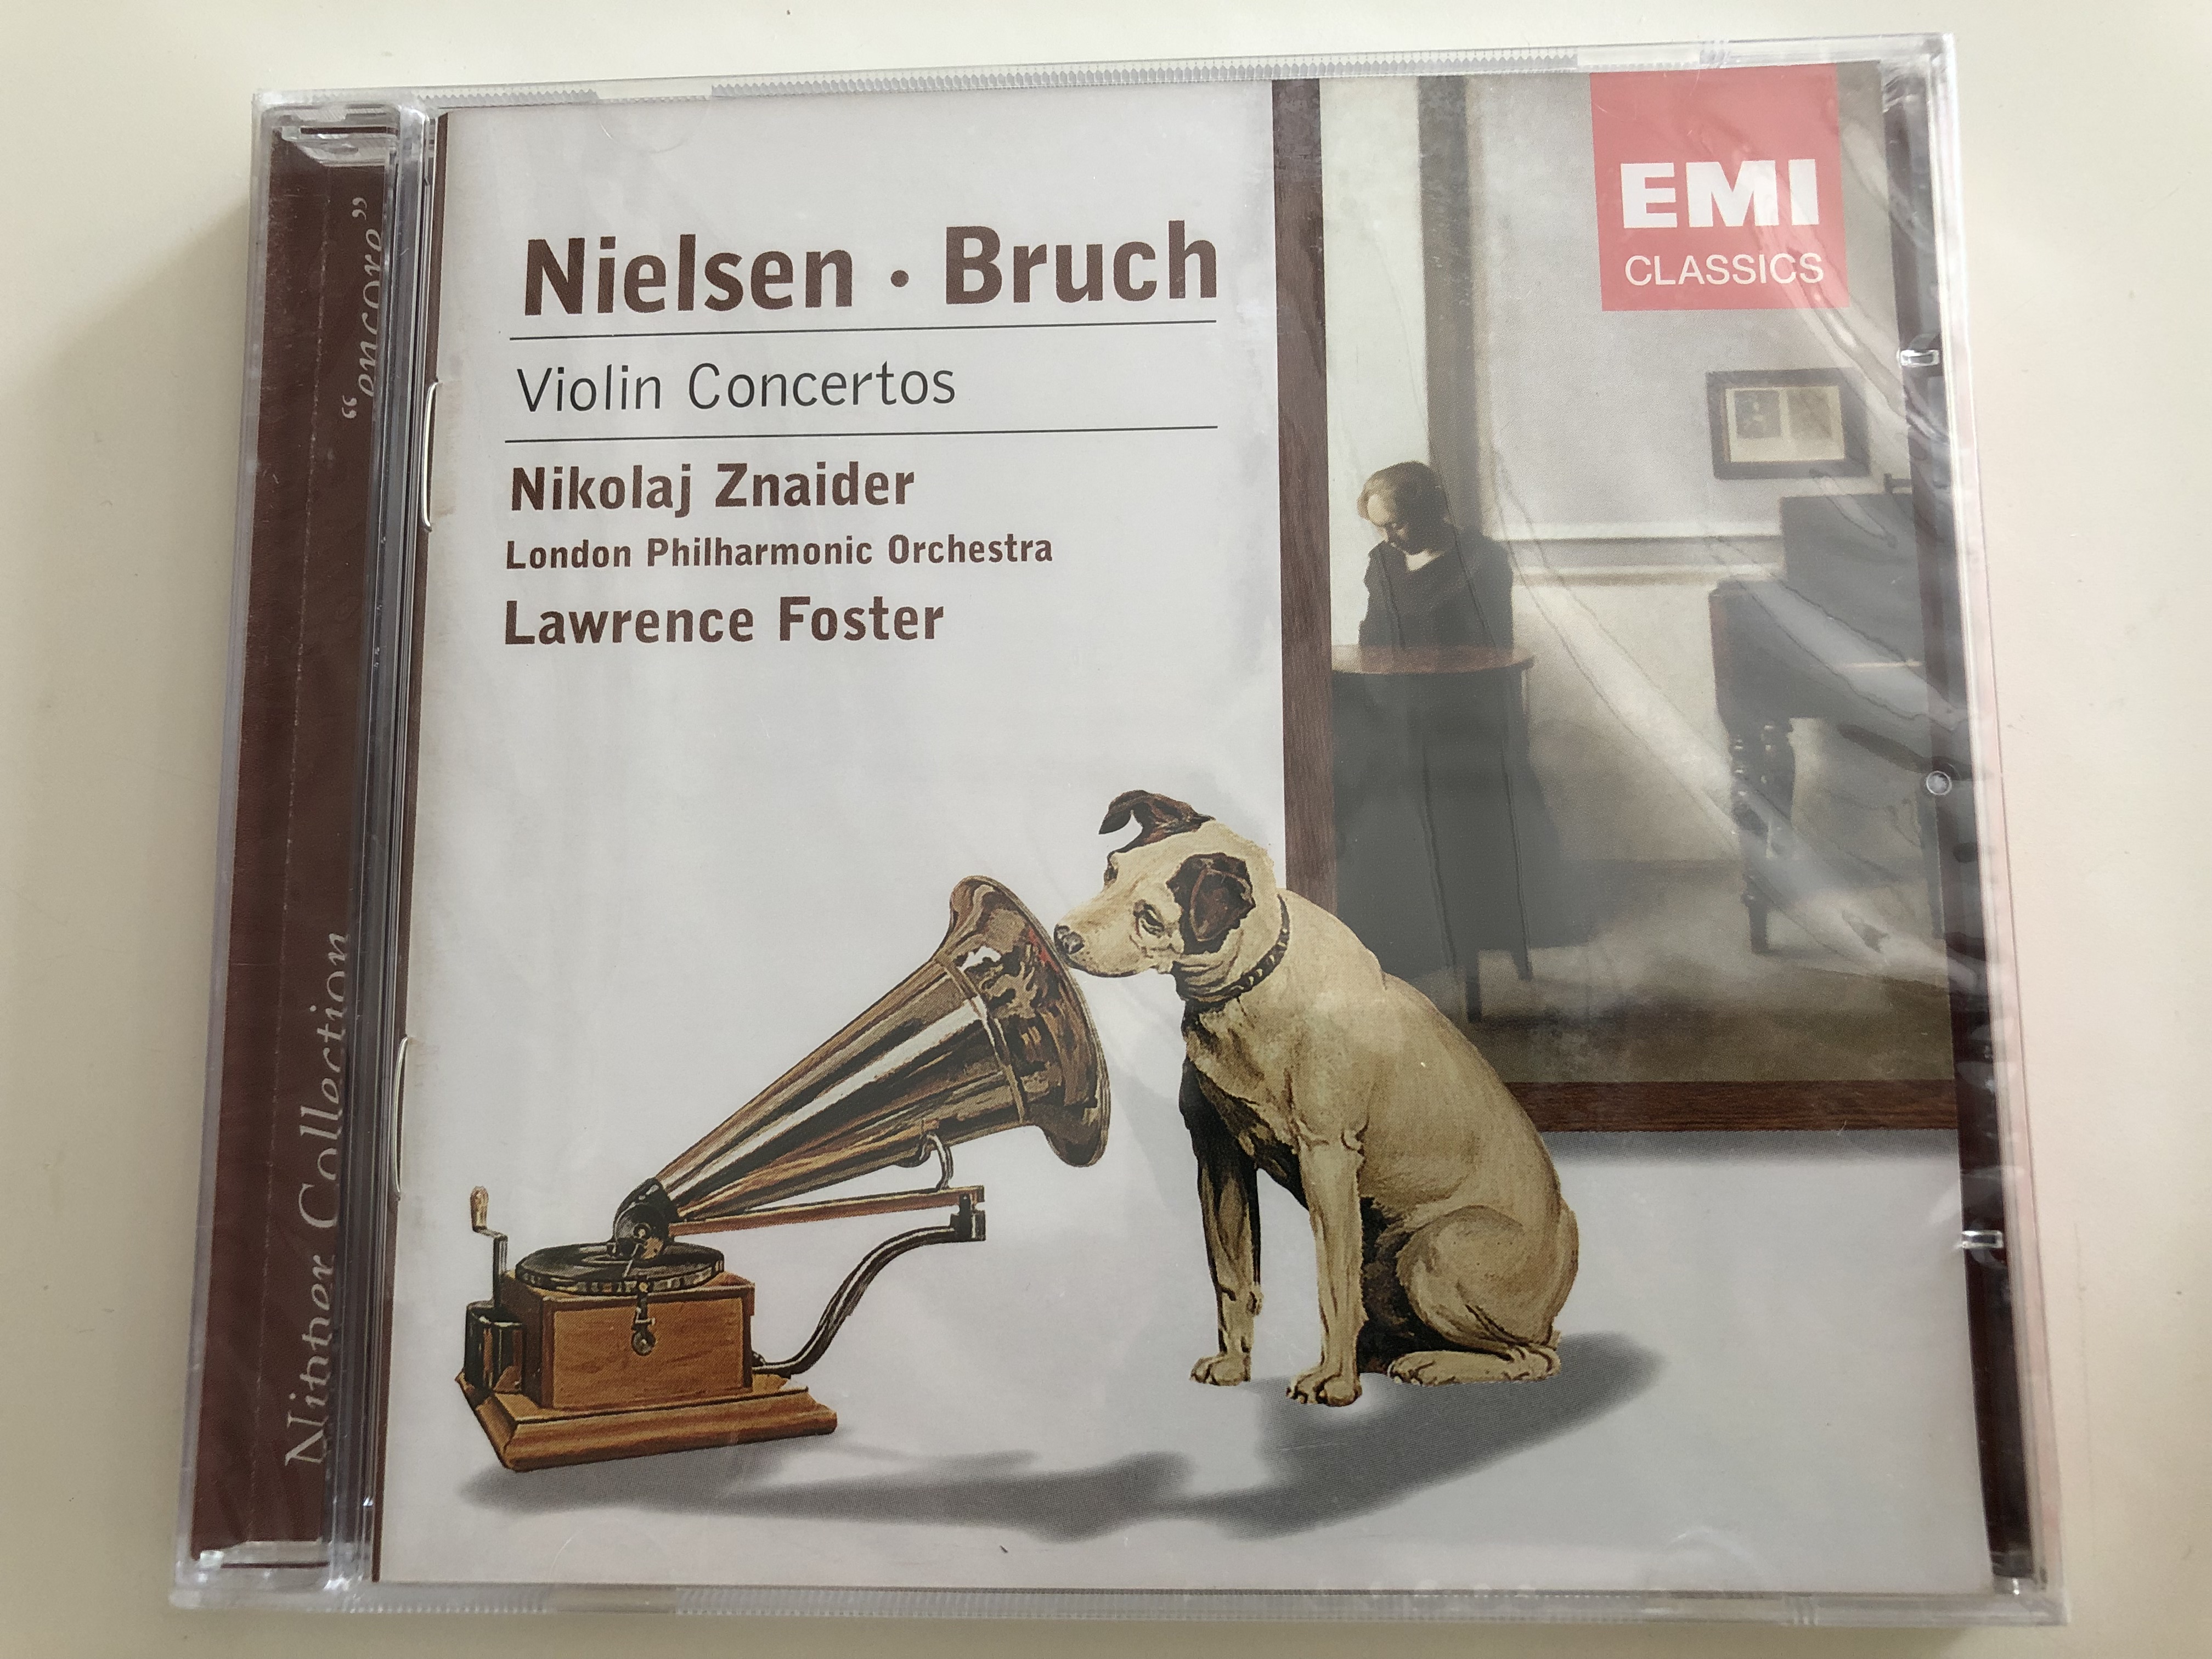 nielsen-bruch-violin-concertos-nikolaj-znaider-violin-london-philharmonic-orchestra-conducted-by-lawrence-foster-emi-classics-audio-cd-2006-1-.jpg